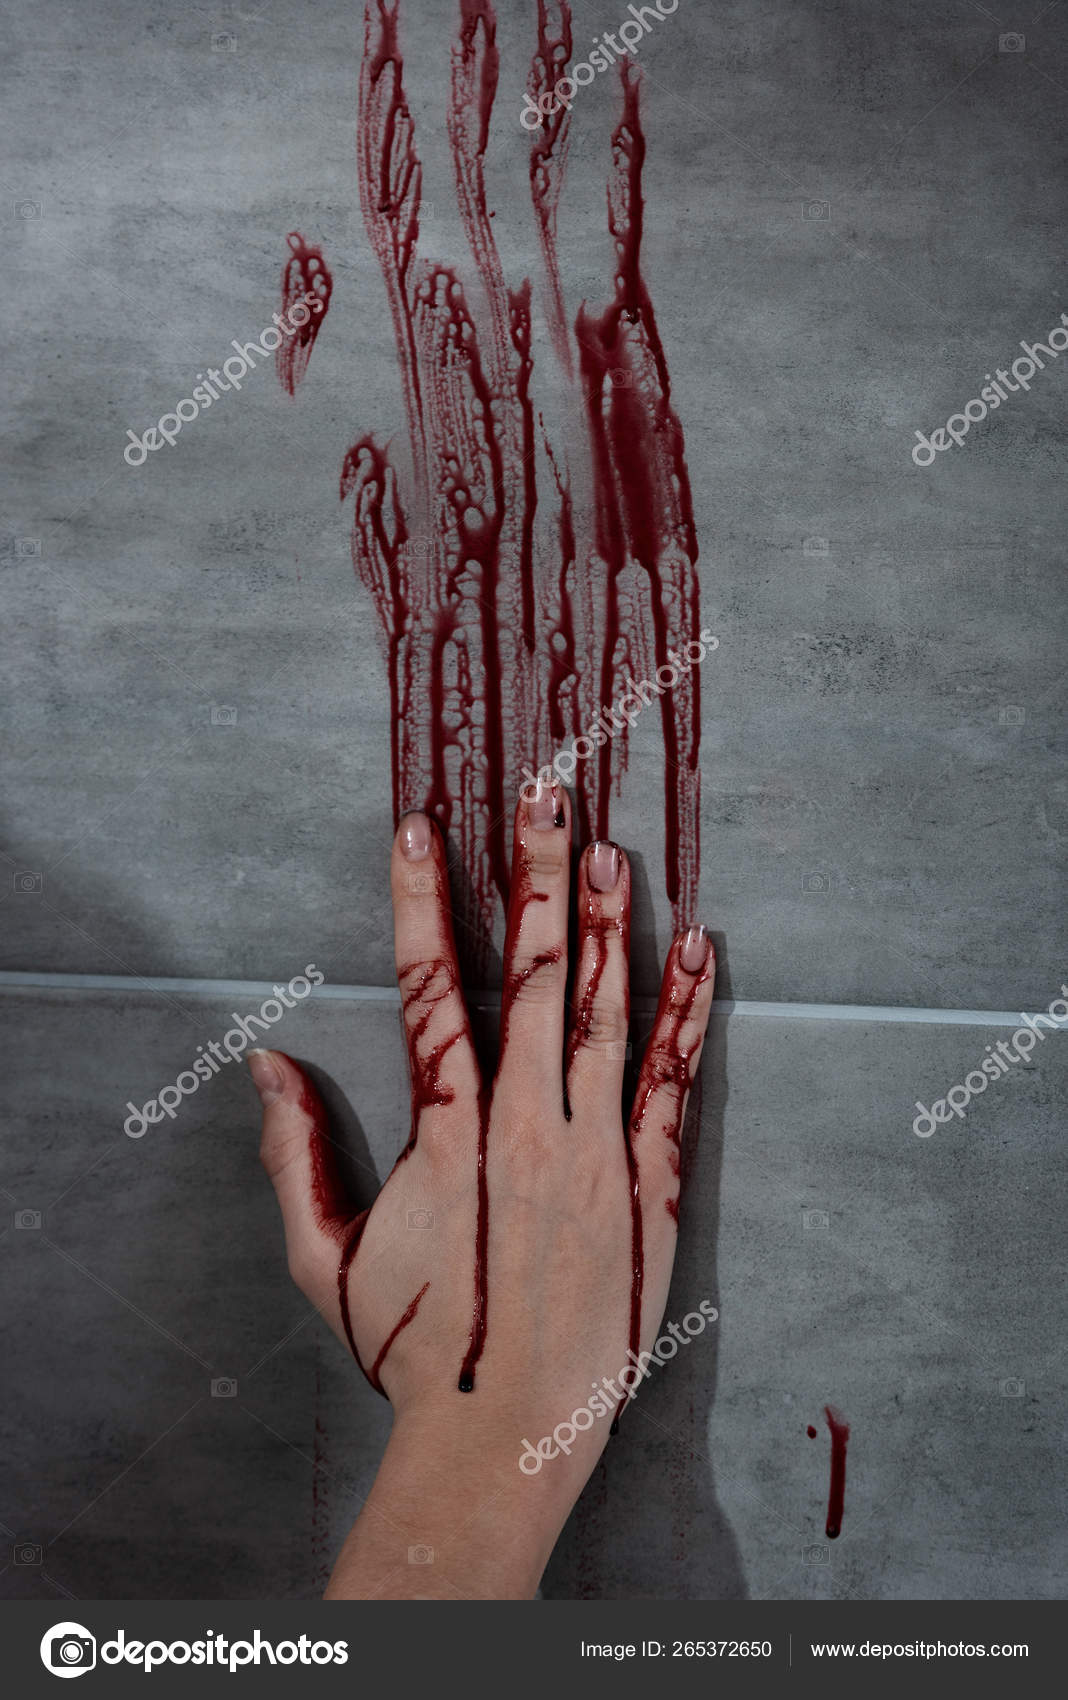 Bleeding Hand Images Royalty Free Stock Bleeding Hand Photos Pictures Depositphotos